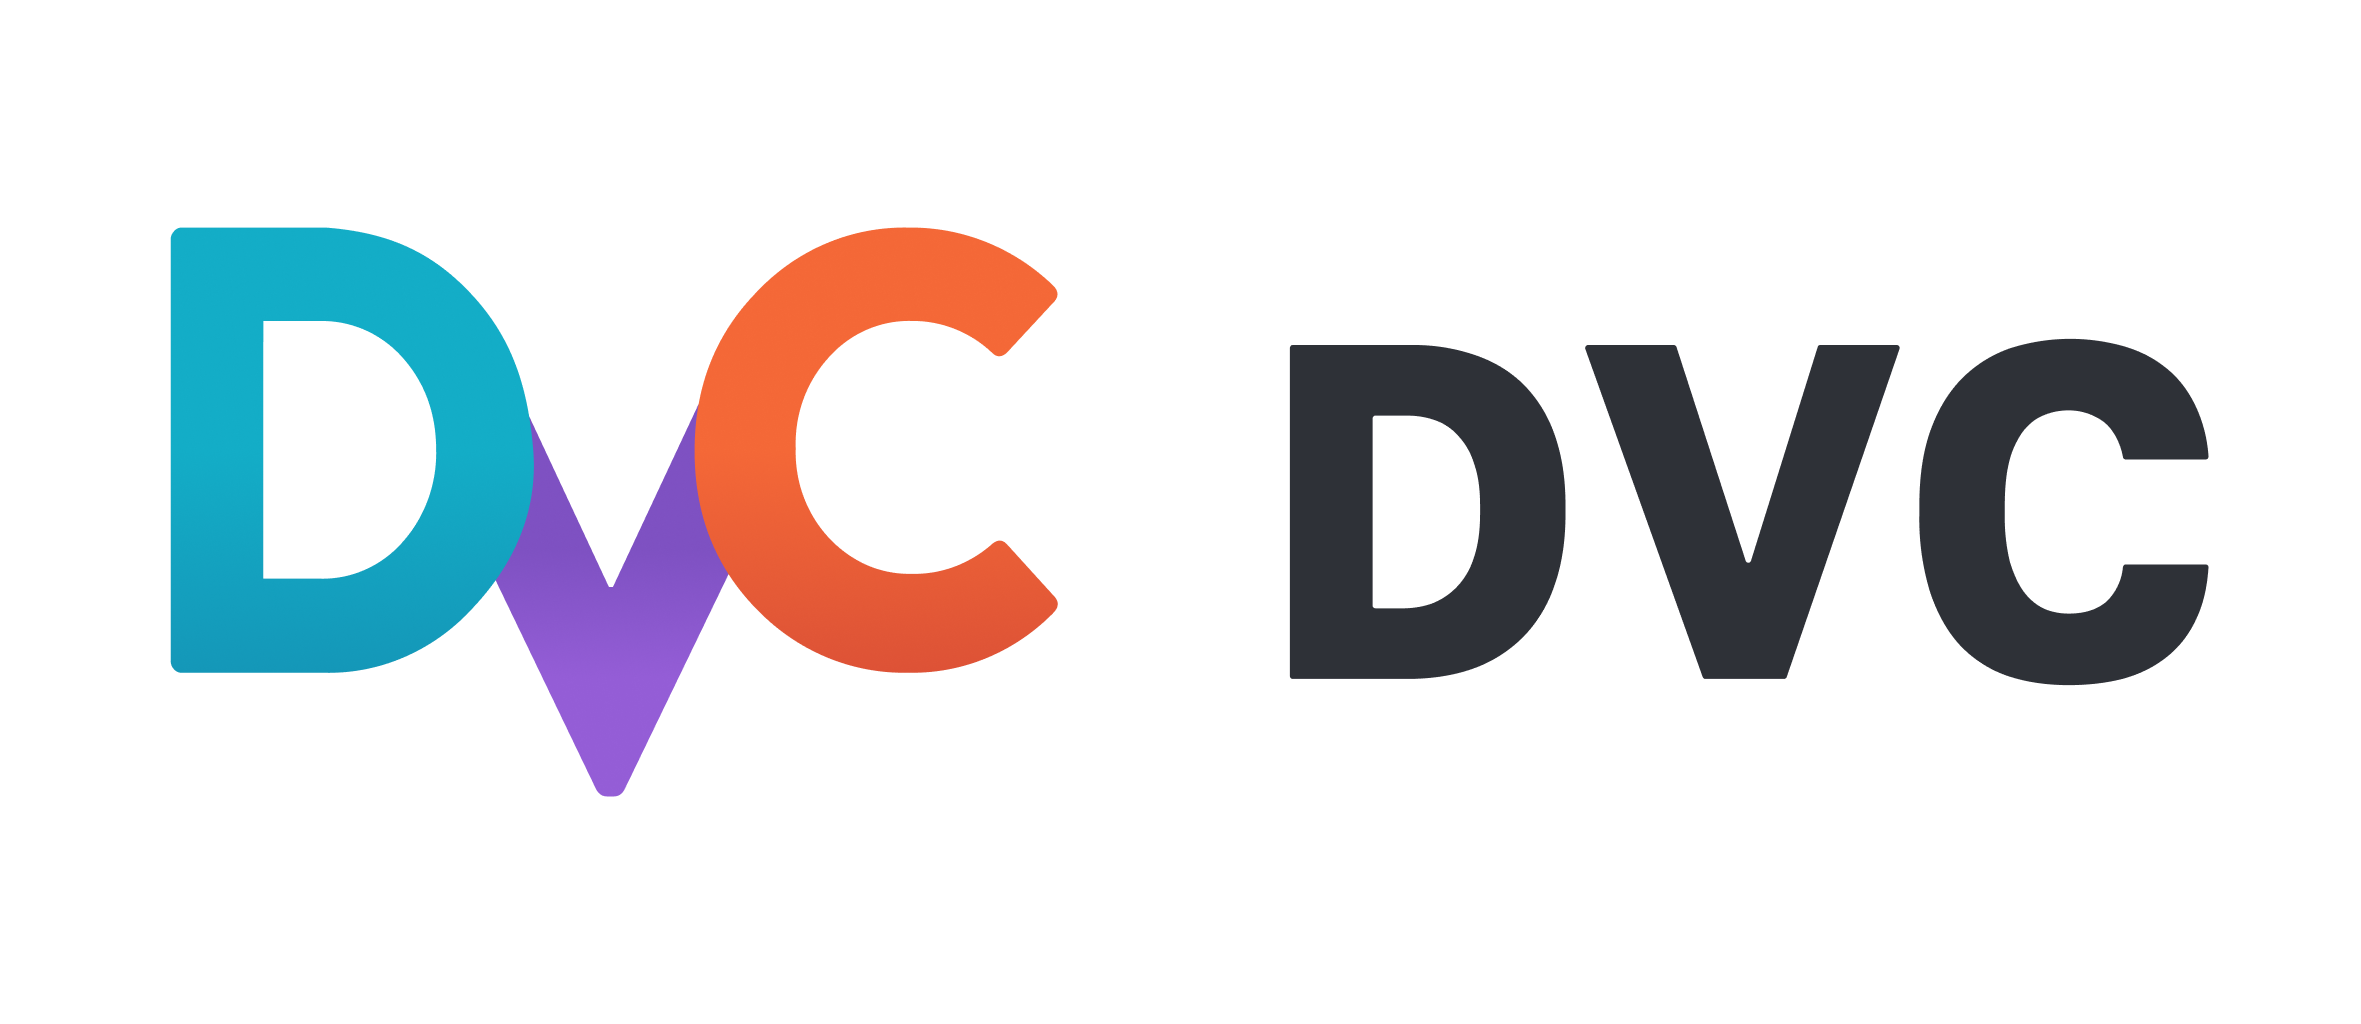 DVC by ReciprocateX